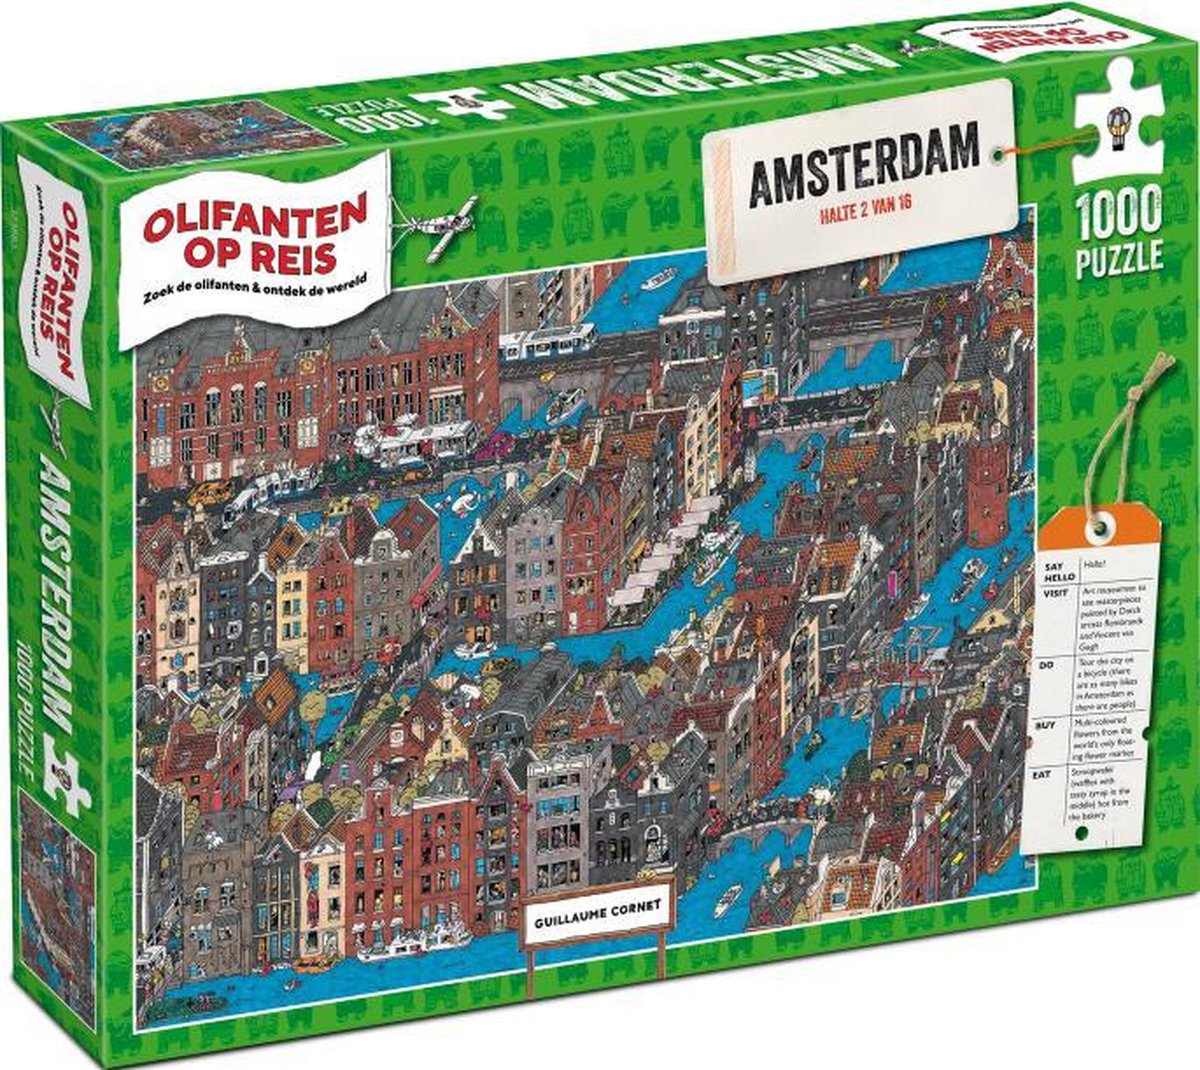 Olifanten op Reis Amsterdam Puzzle 1000 pieces